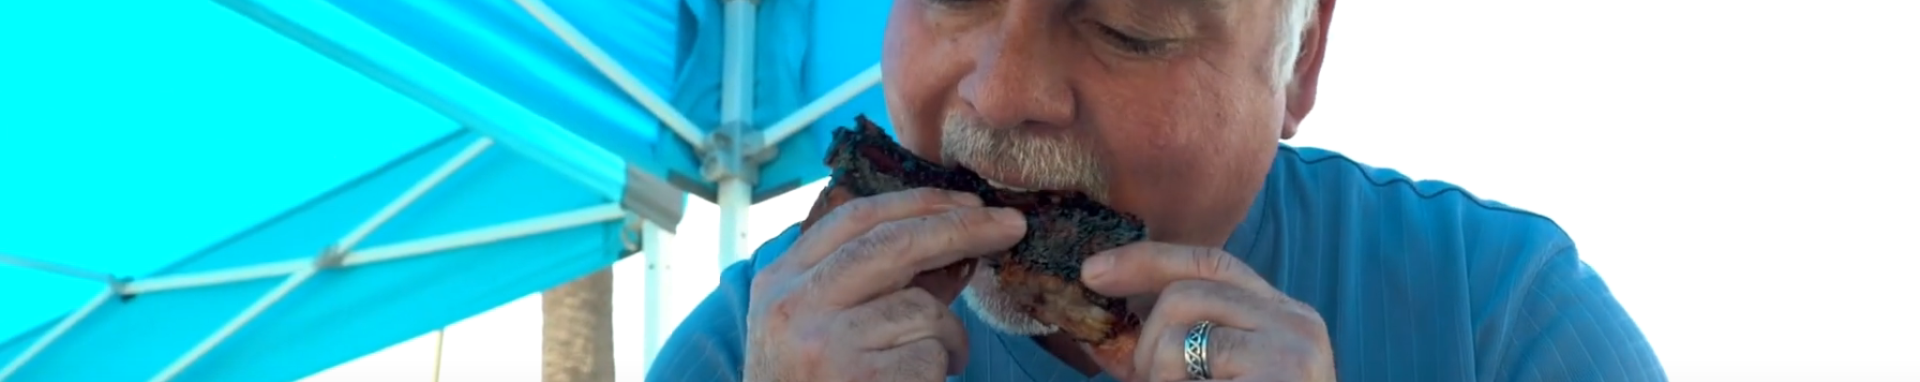 BANNER KCBS Judge tasting ribs